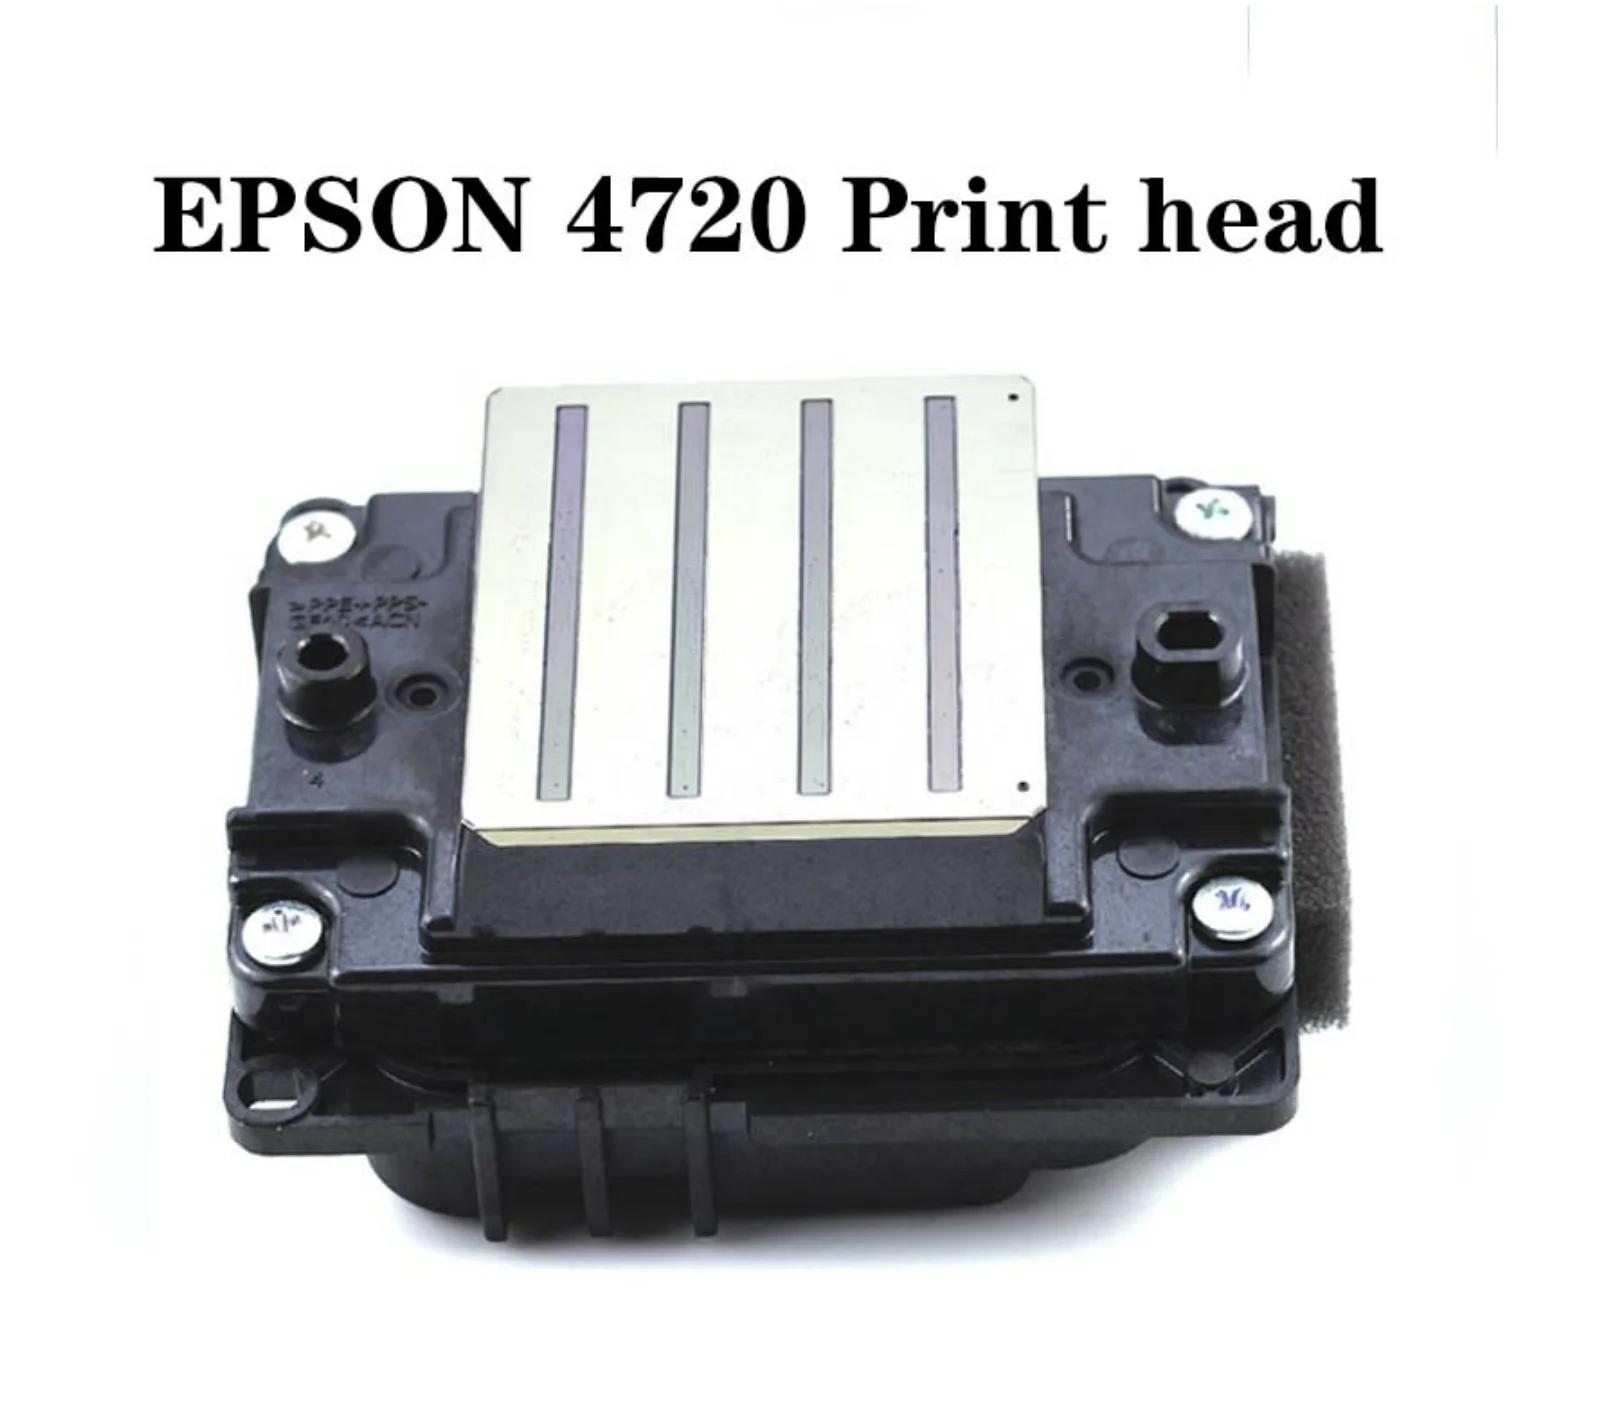 printhead epson  print head For Epson Printer head for WF4720 4730 WF4720 Fedar sublimation printer Fedar printer FD